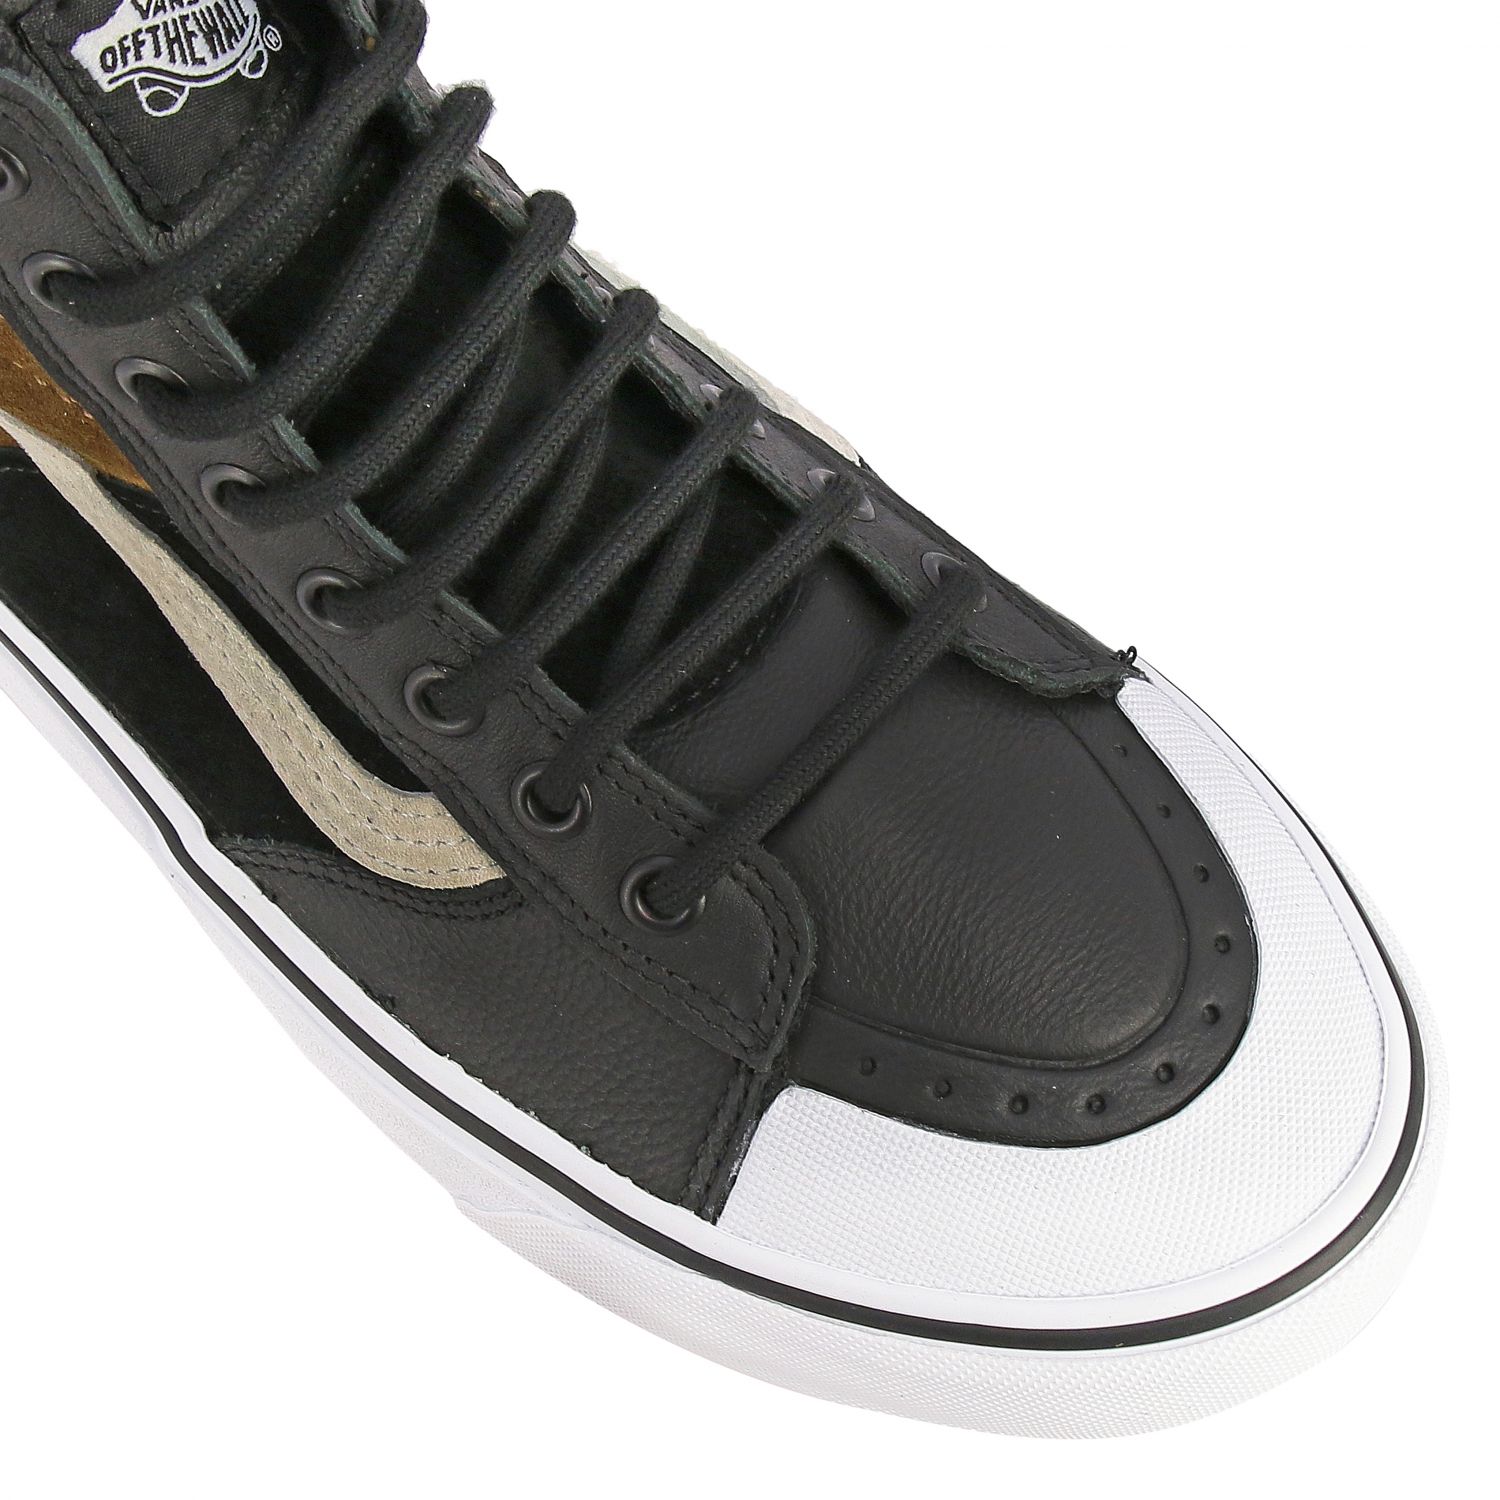 Sneakers Vans: Sneakers Mte 360 sk8-hi Vans in pelle e camoscio nero 4